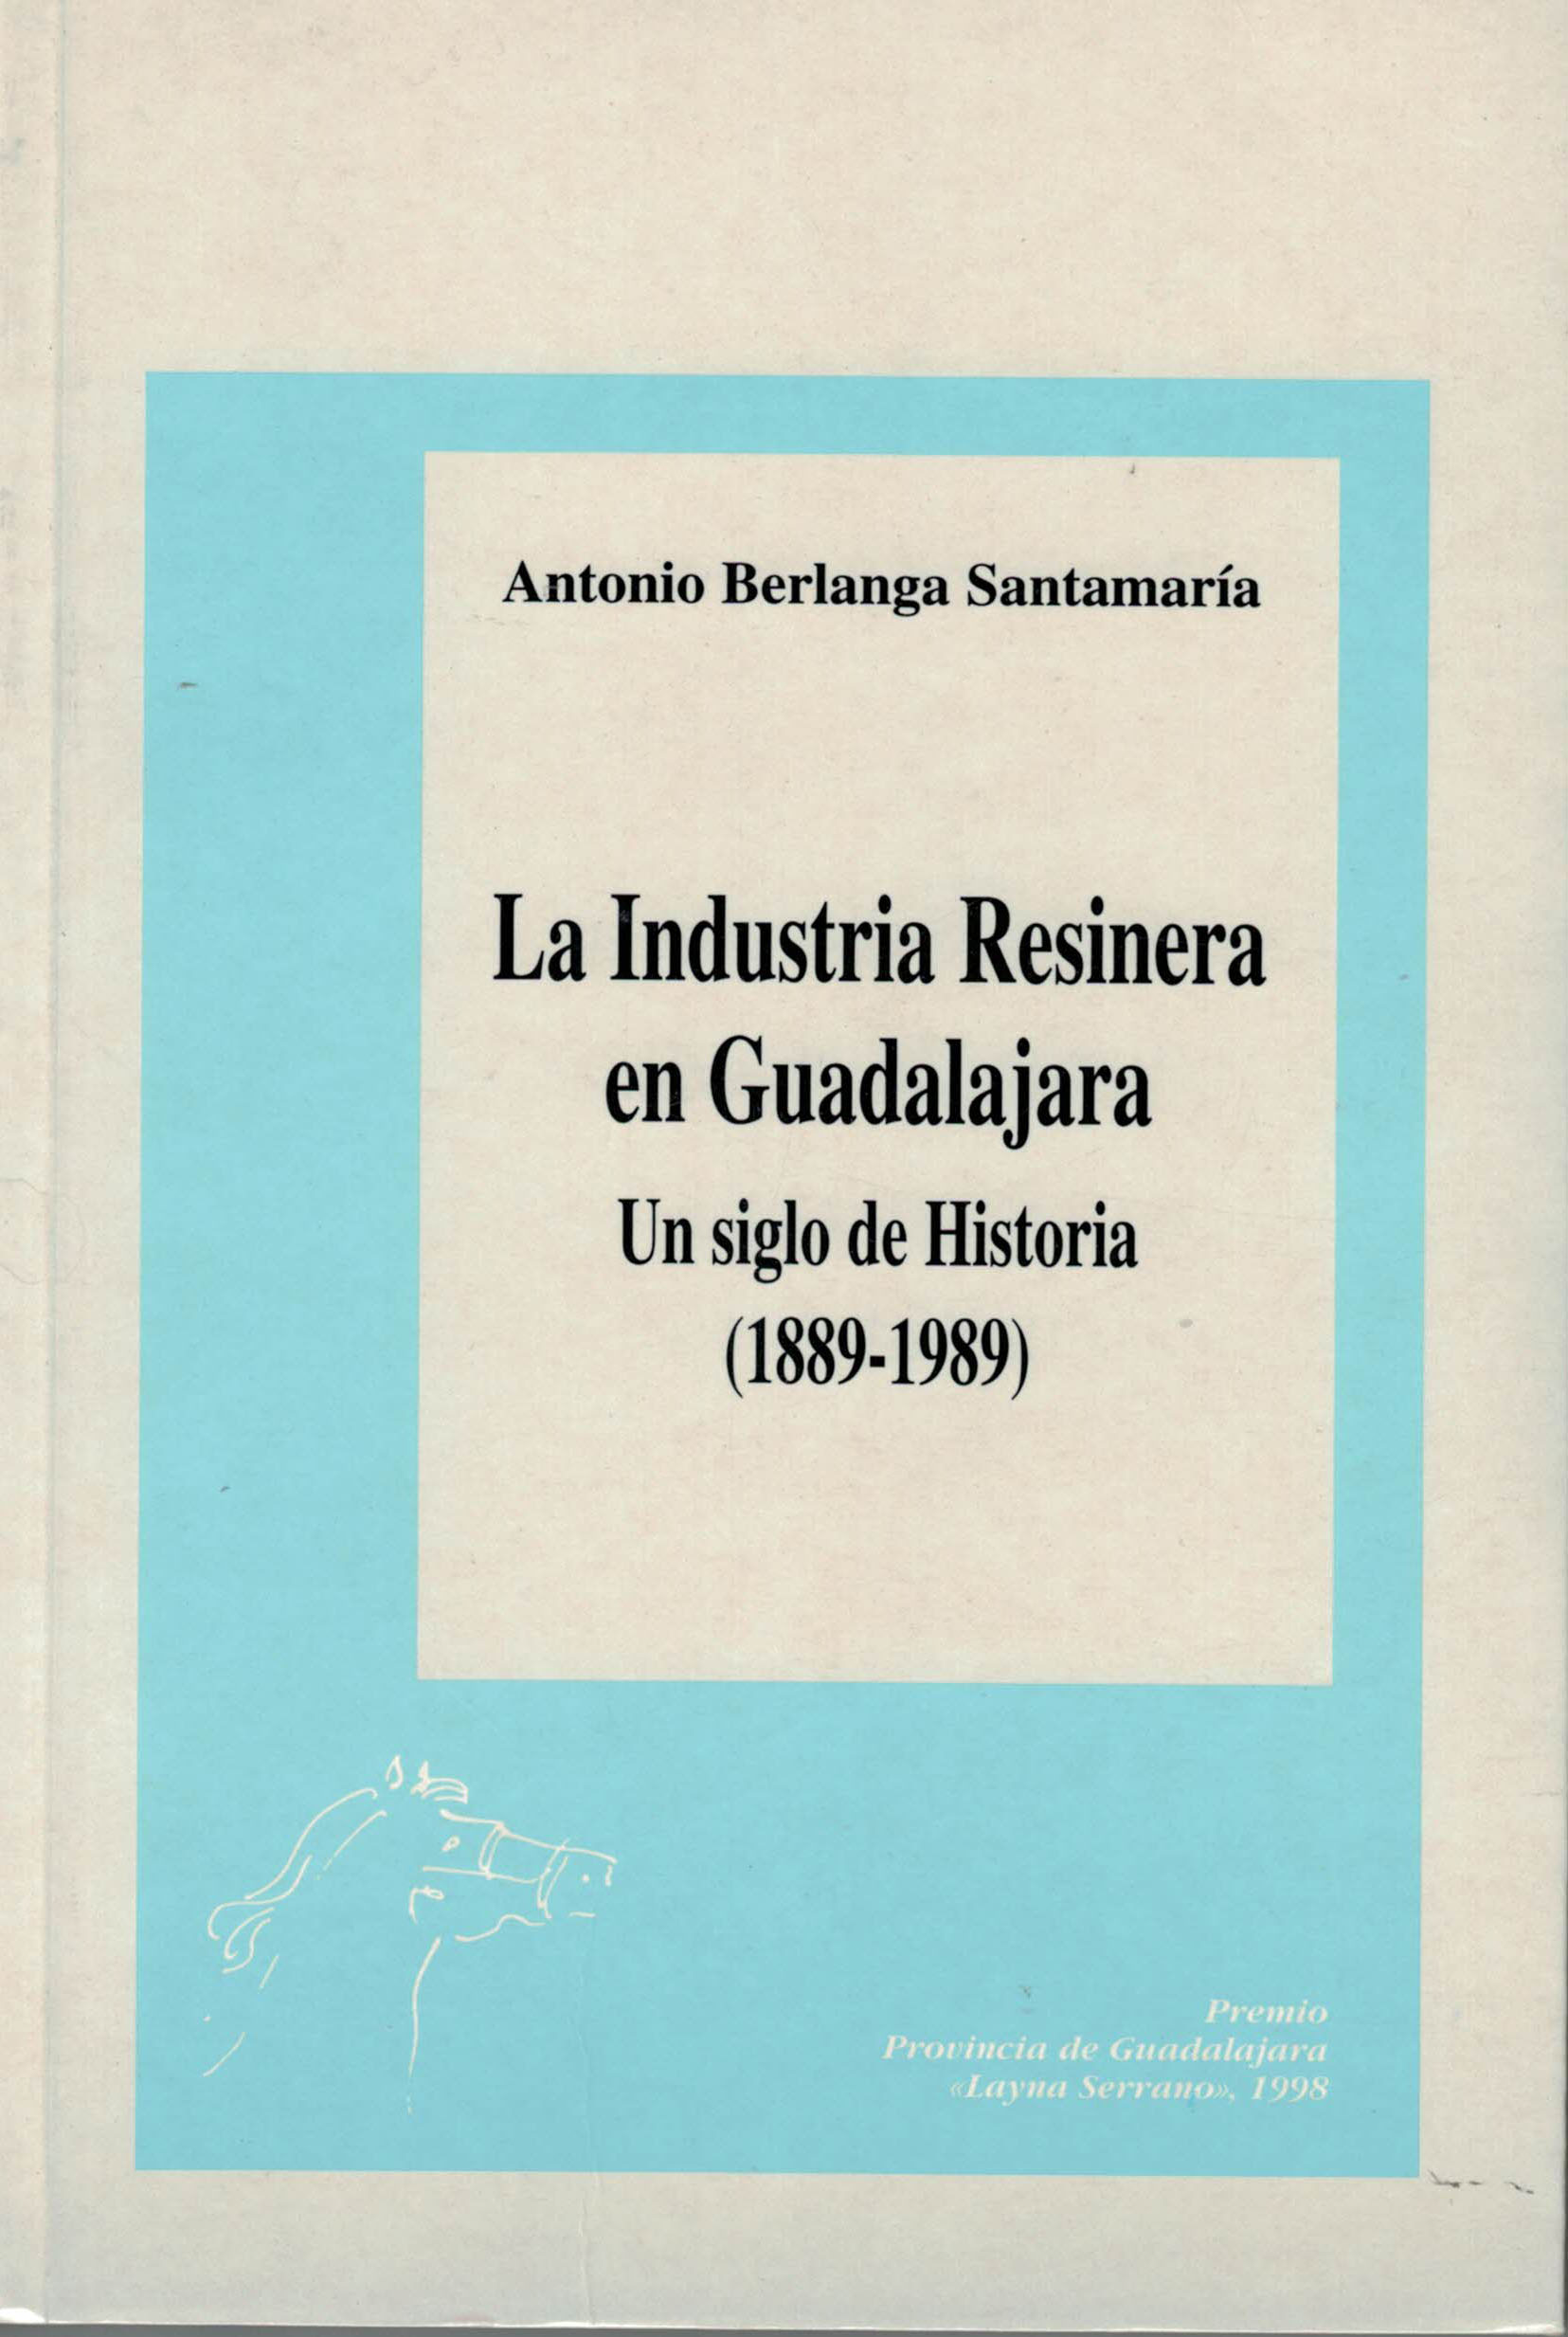 La Industria resinera en Guadalajara, un siglo de Historia